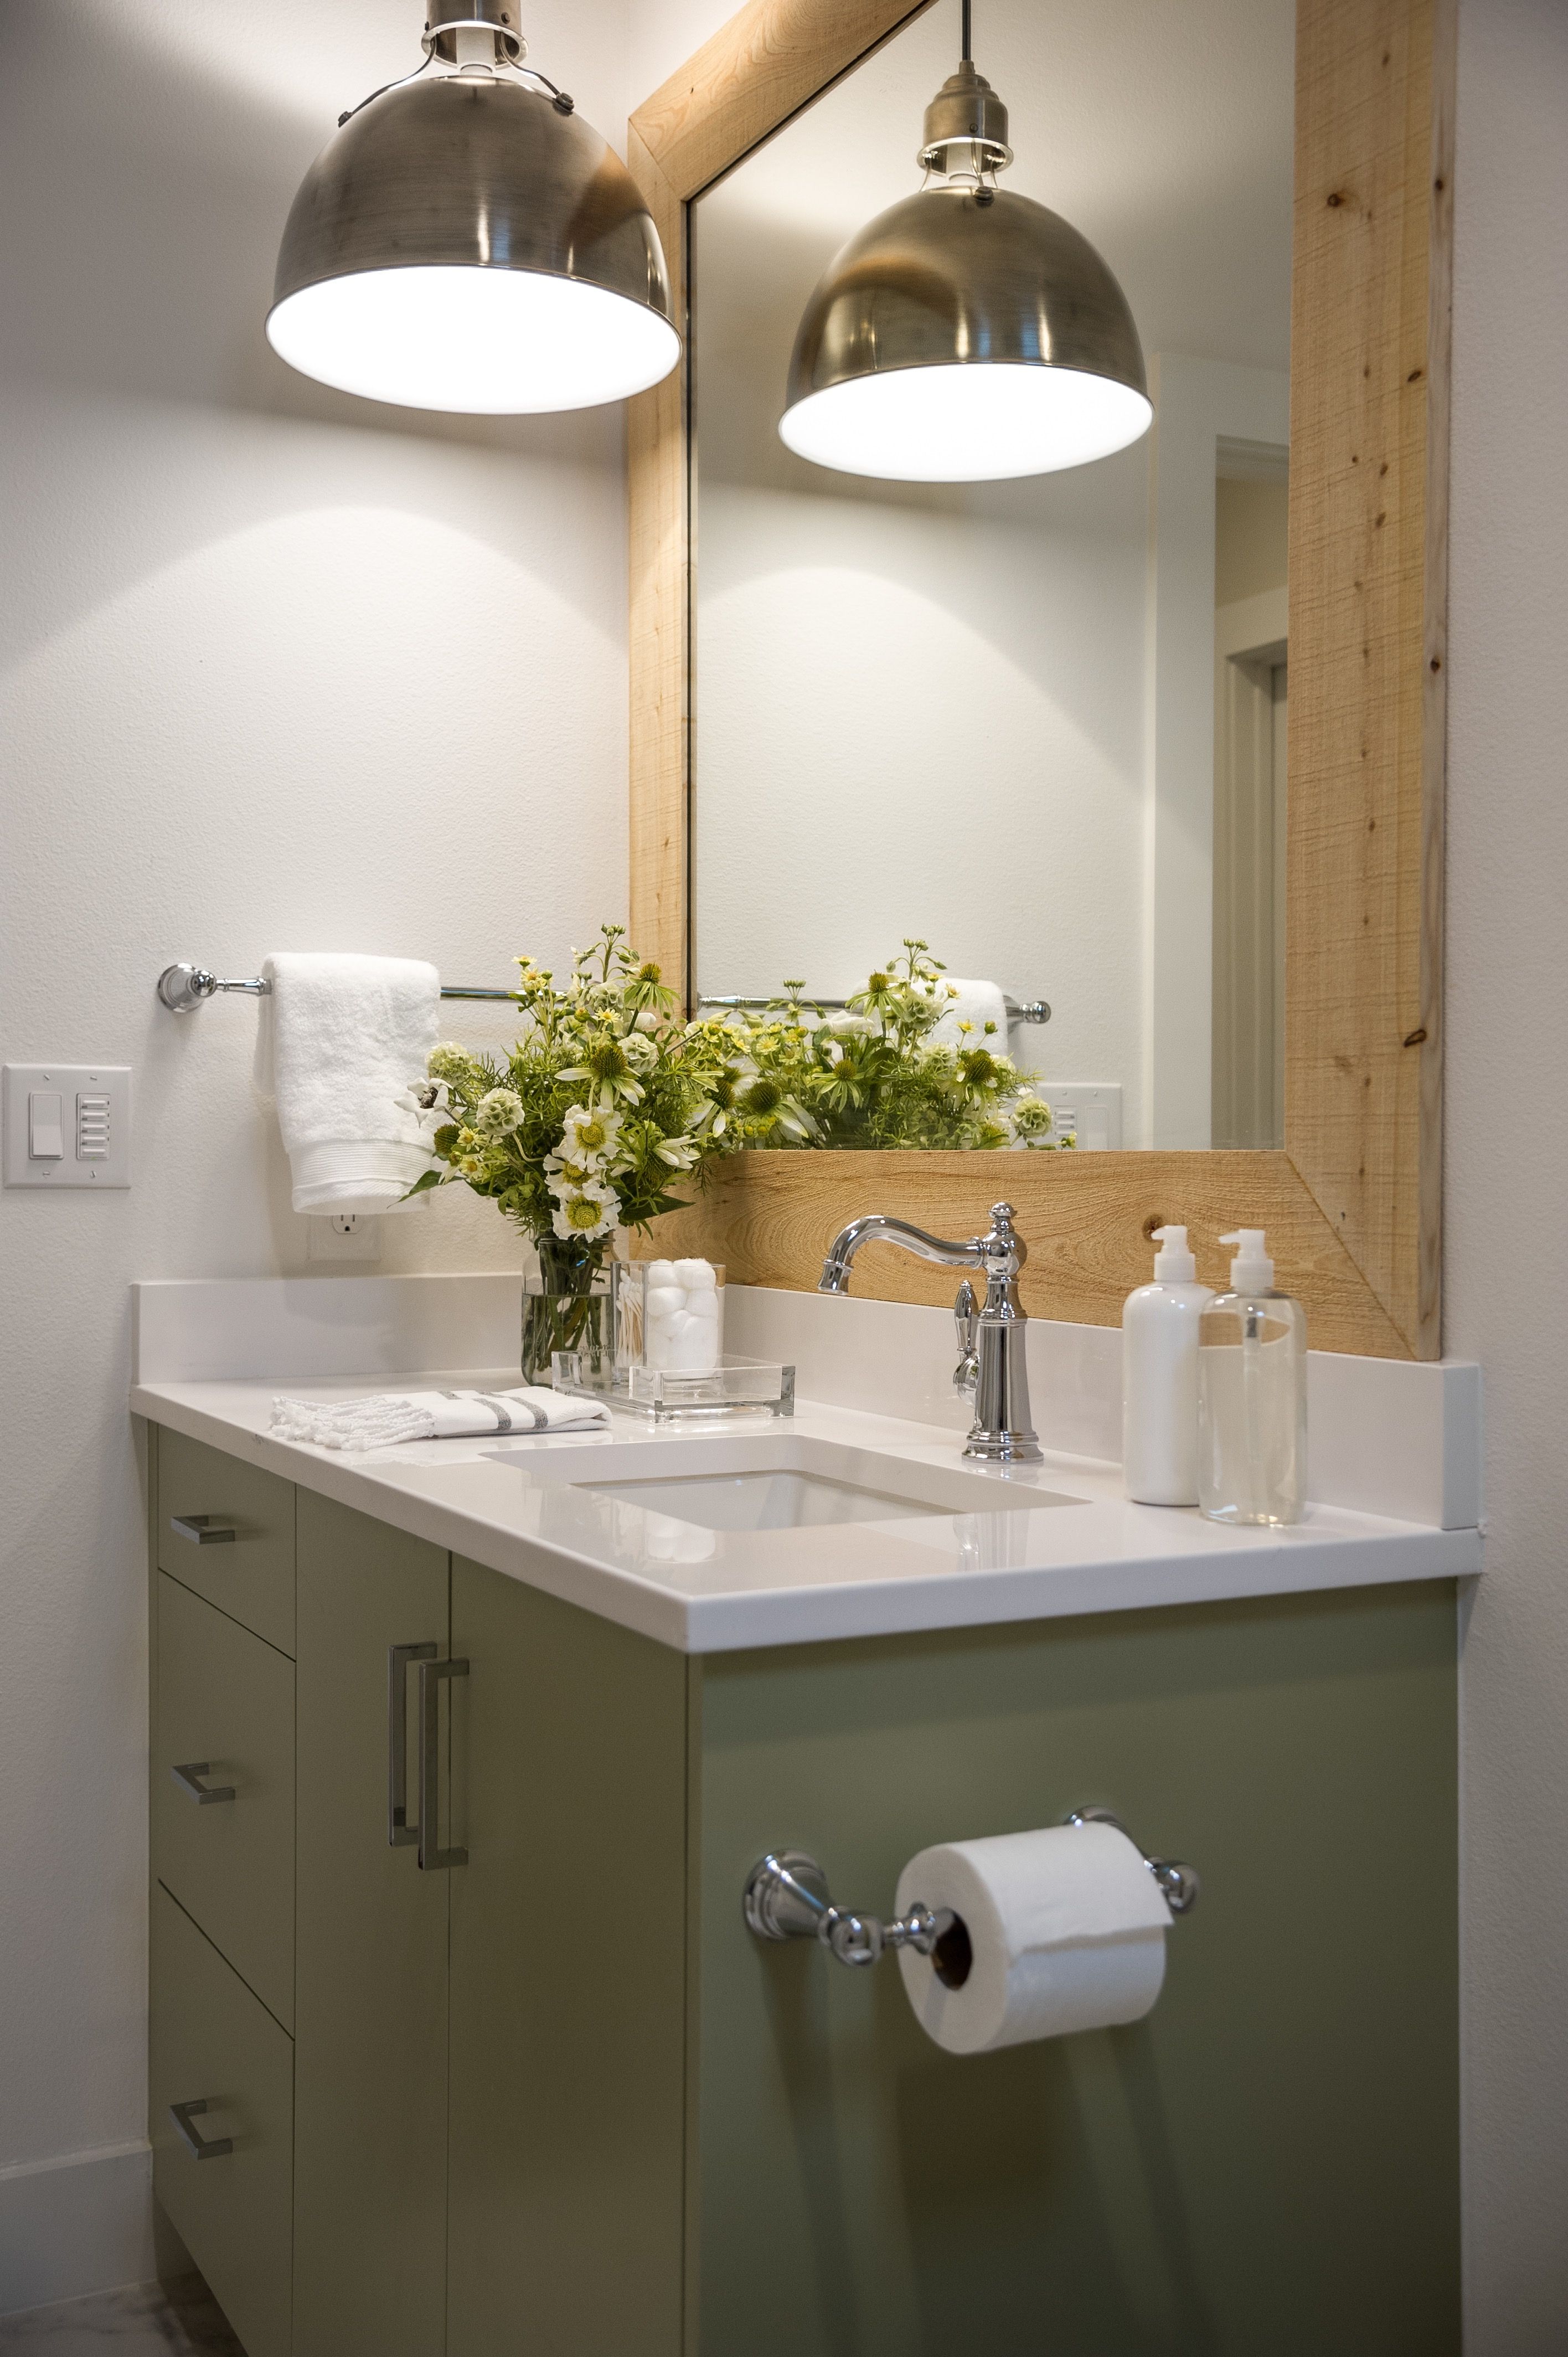 20 Beautiful Modern Bathroom Lighting Ideas 15201 Bathroom Ideas